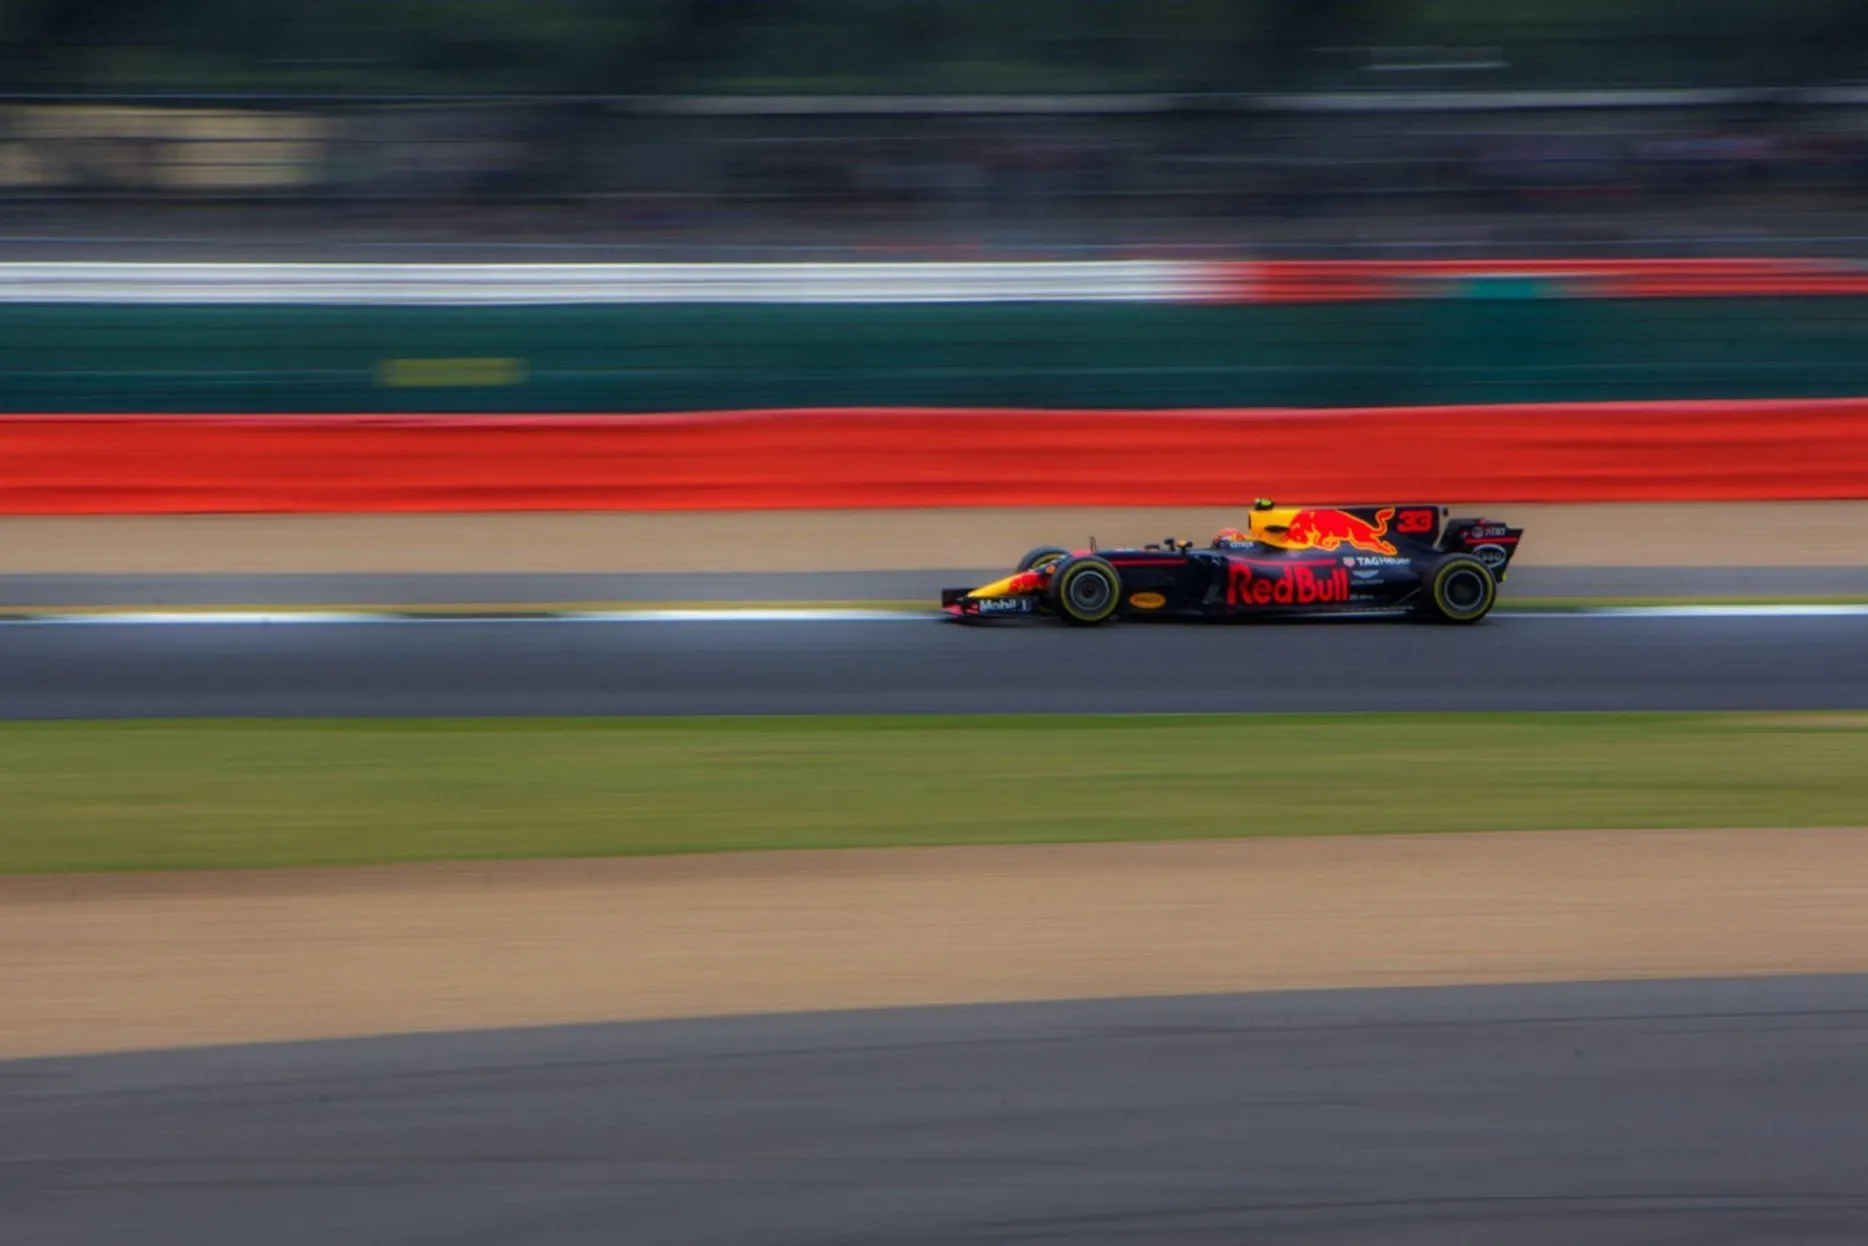 A Red Bull Formula 1 car on a racetrack.